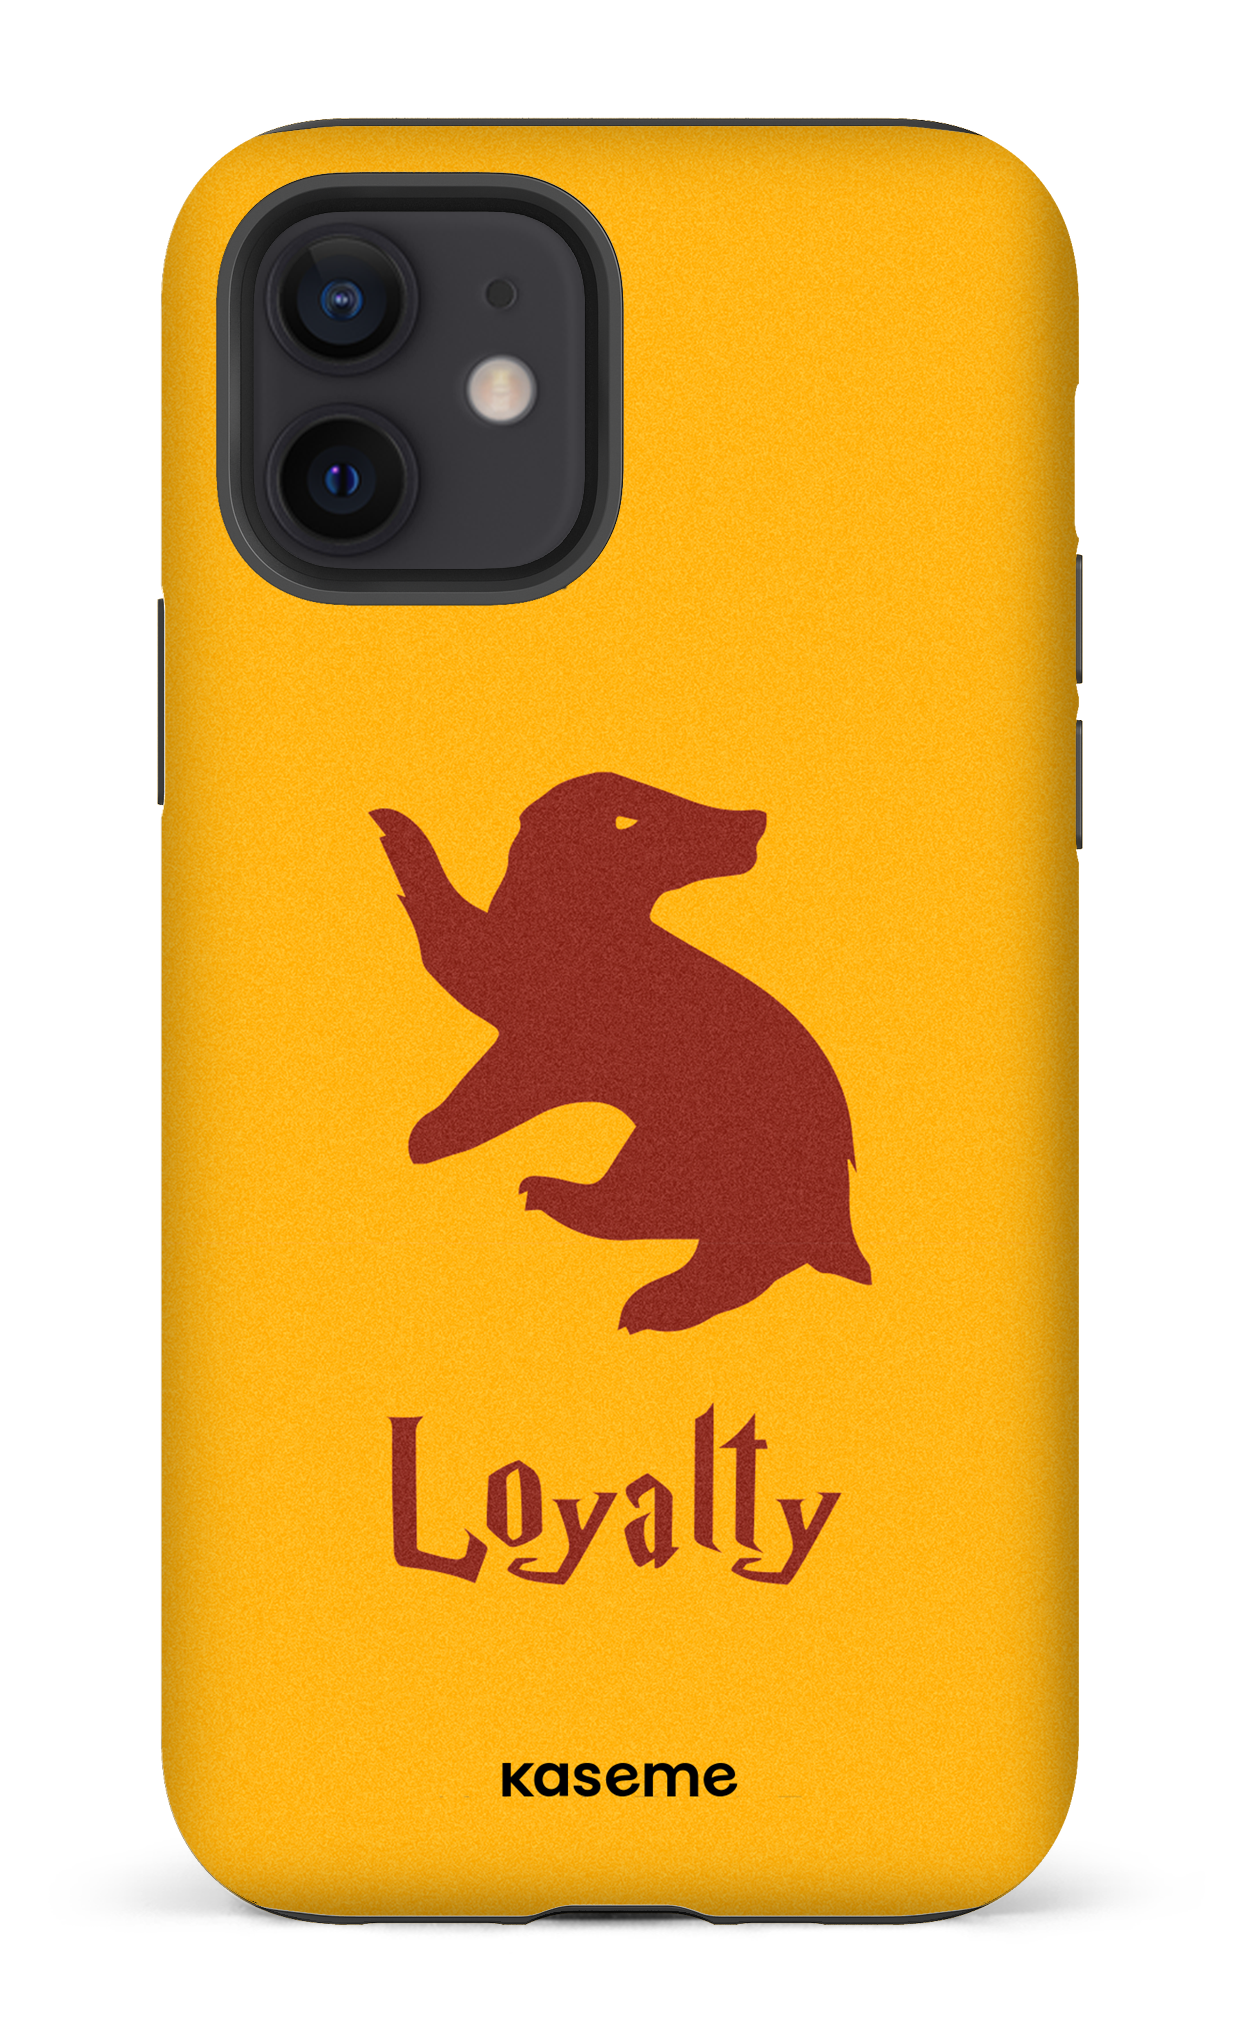 Loyalty - iPhone 12